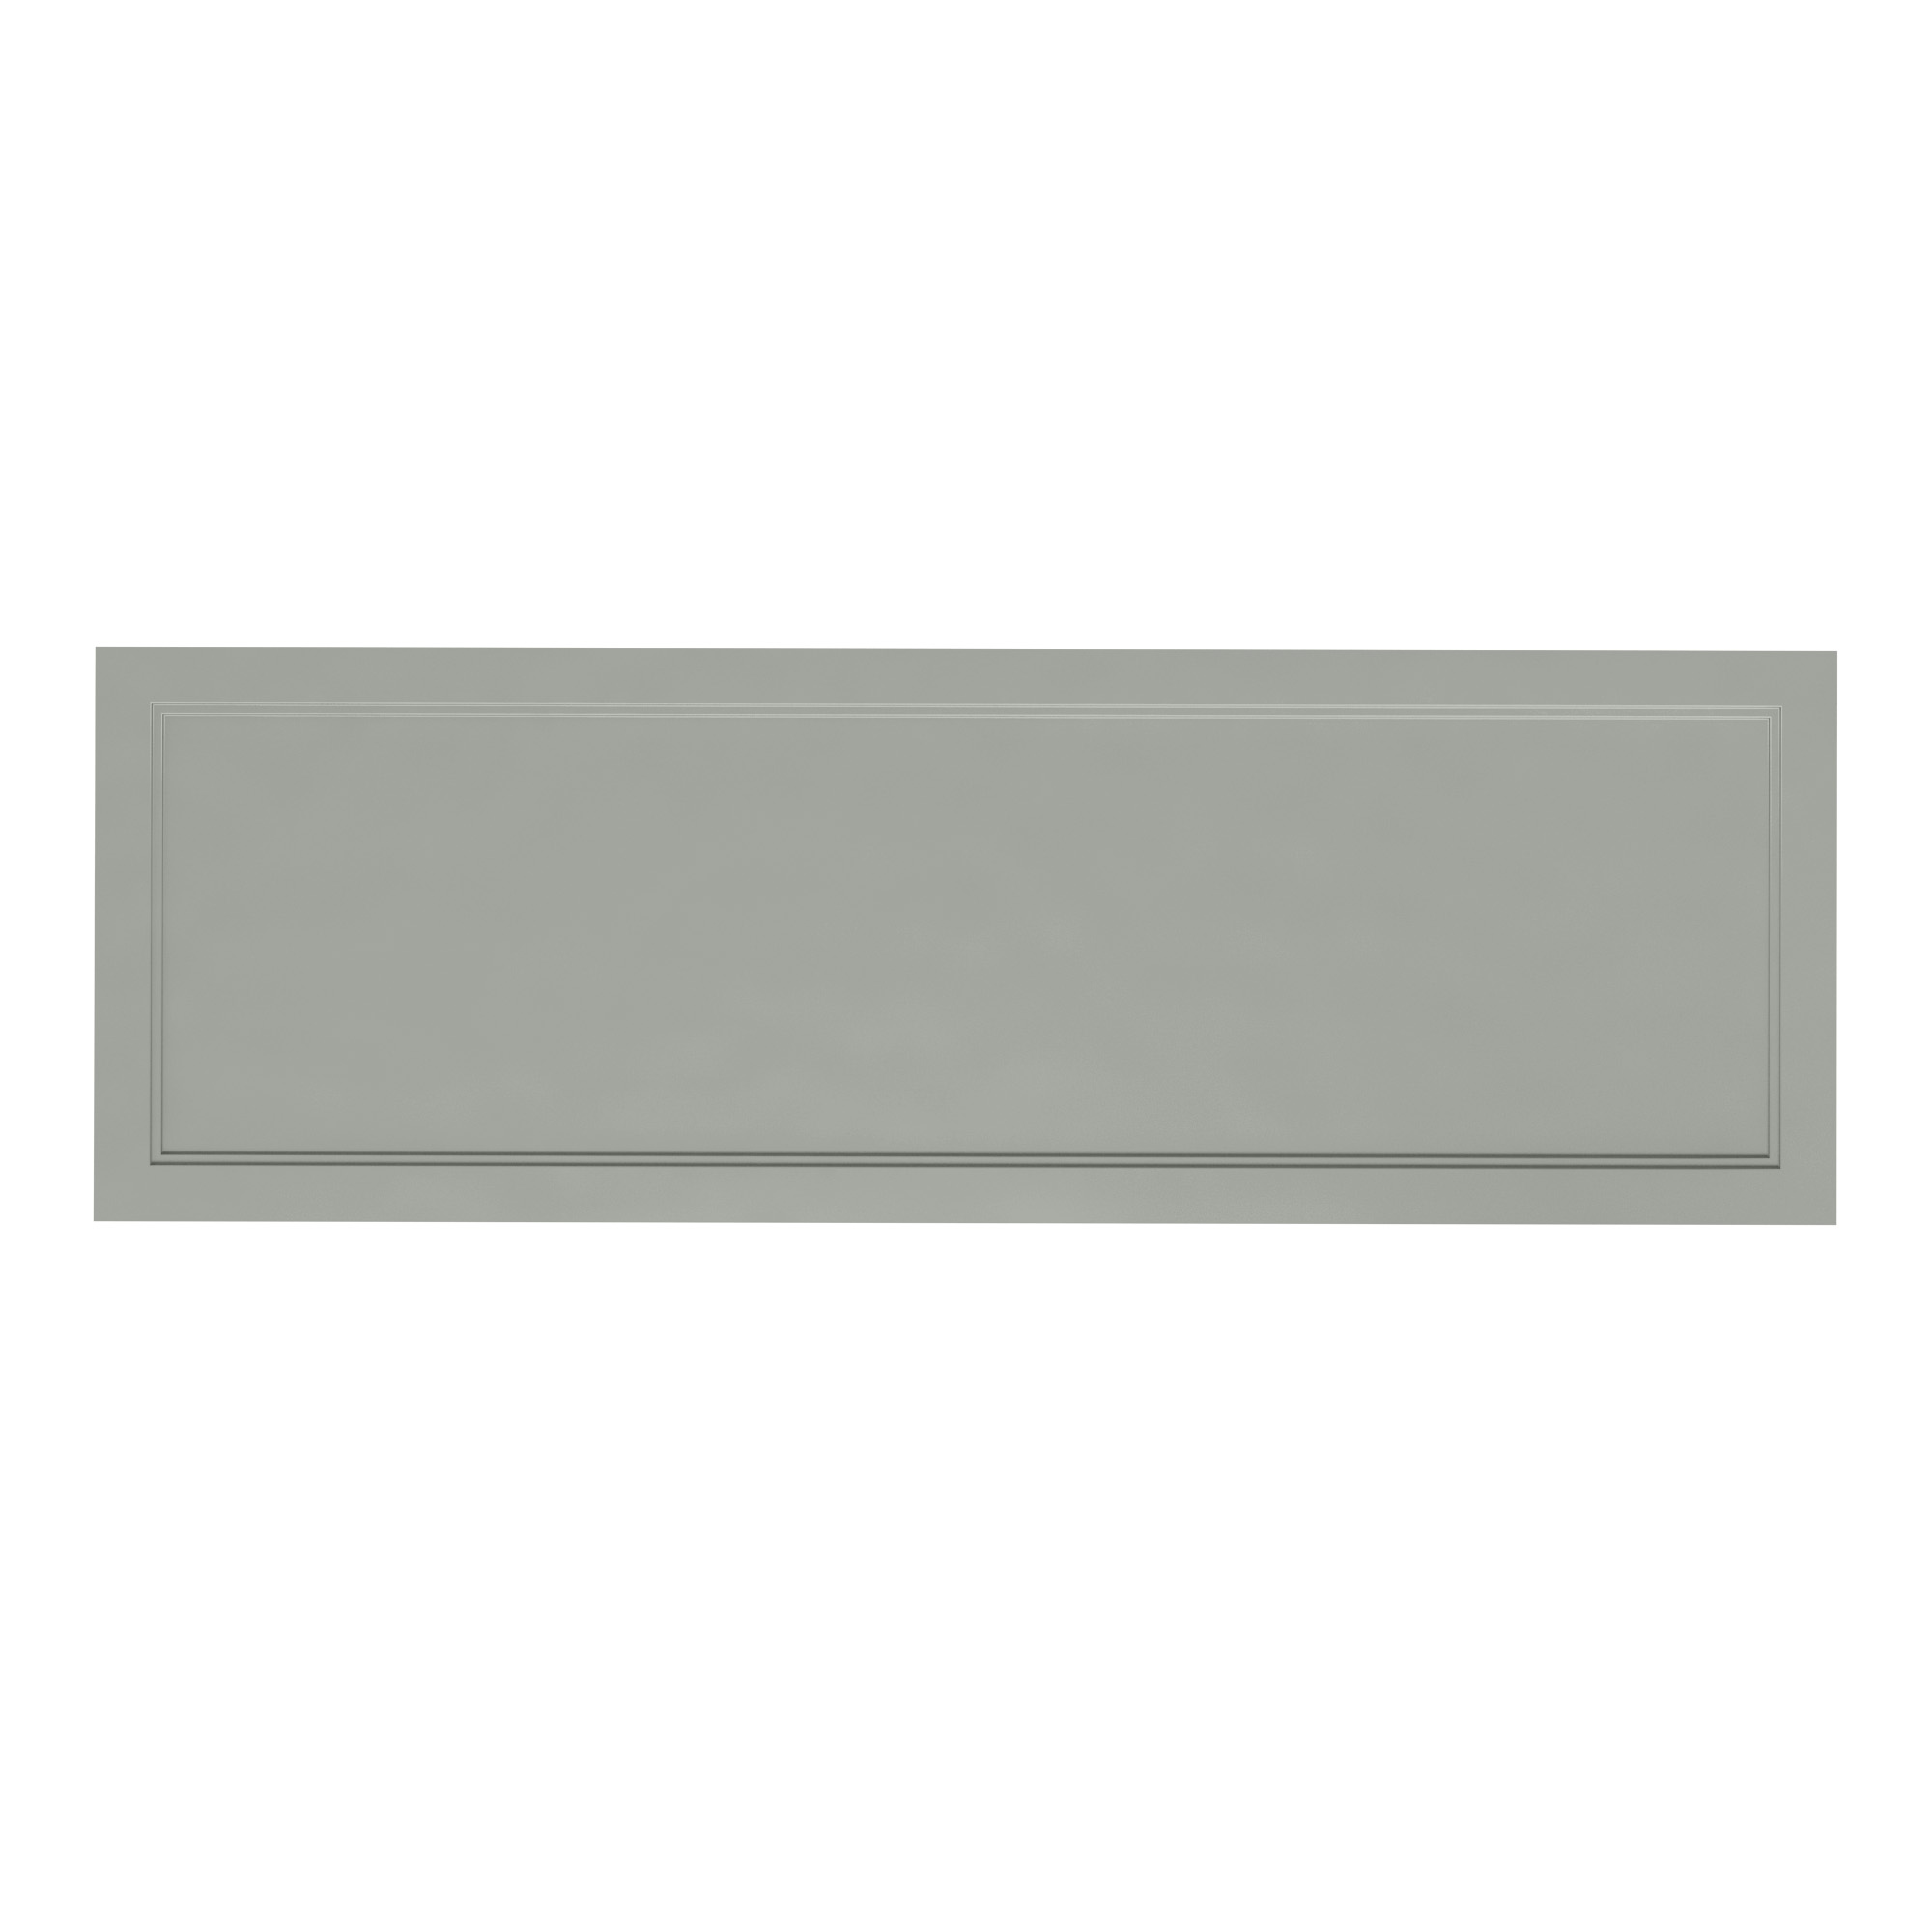 Arundel 170 bath side panel – Dark Olive